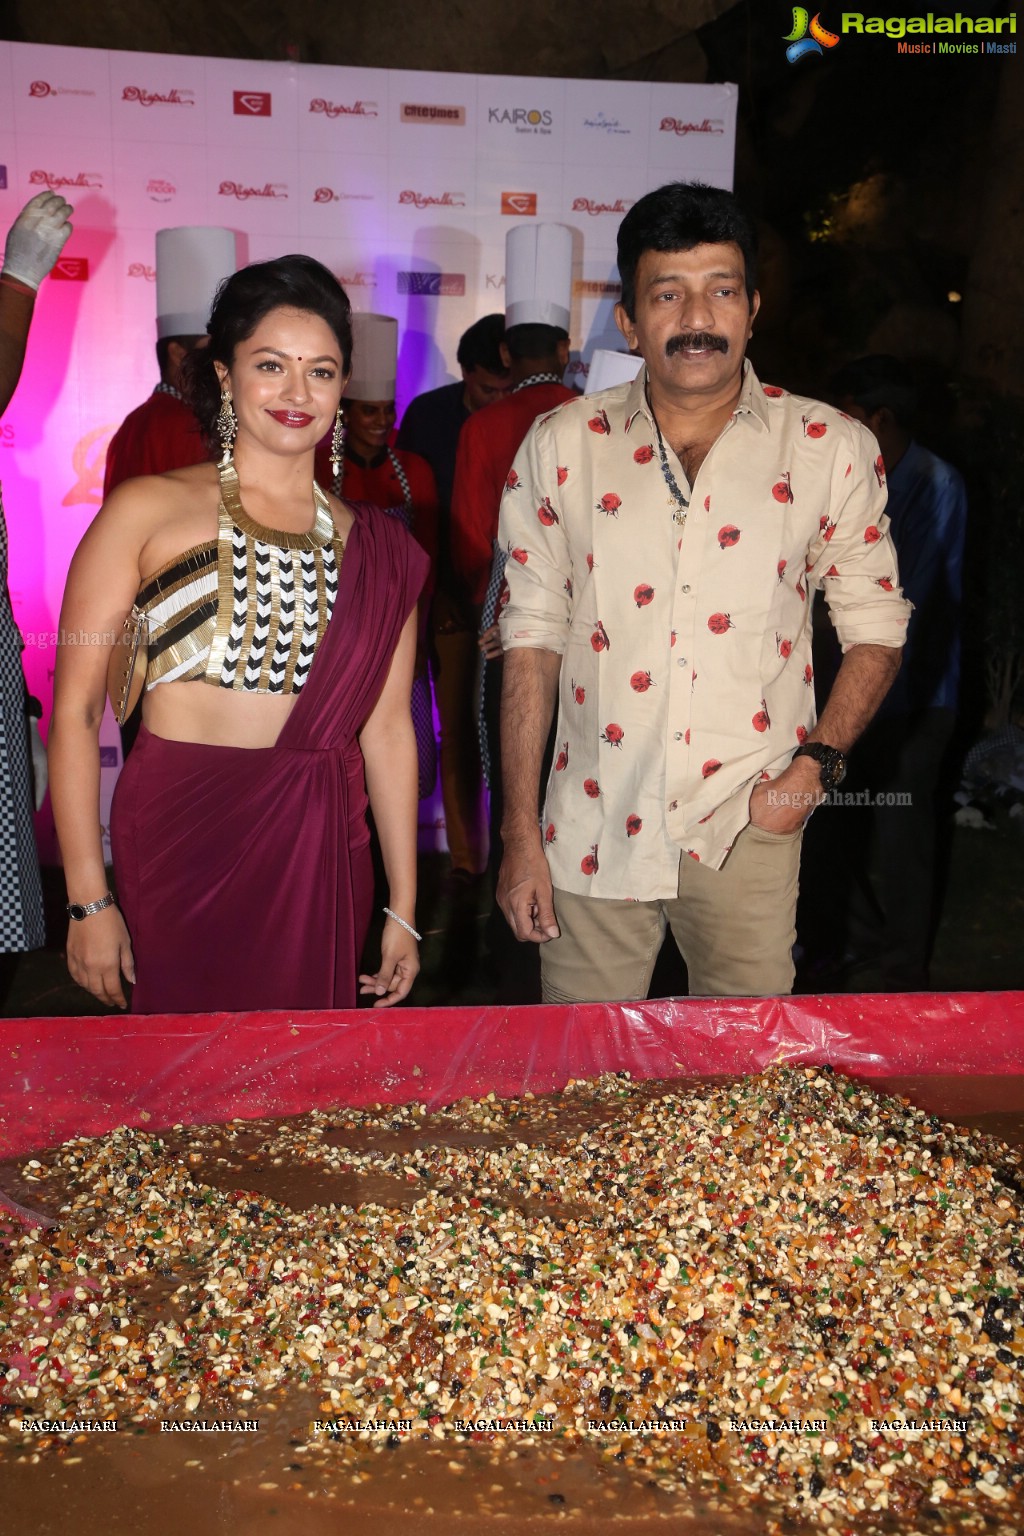 Cake Mixing Ceremony 2017 at Daspalla Hotel